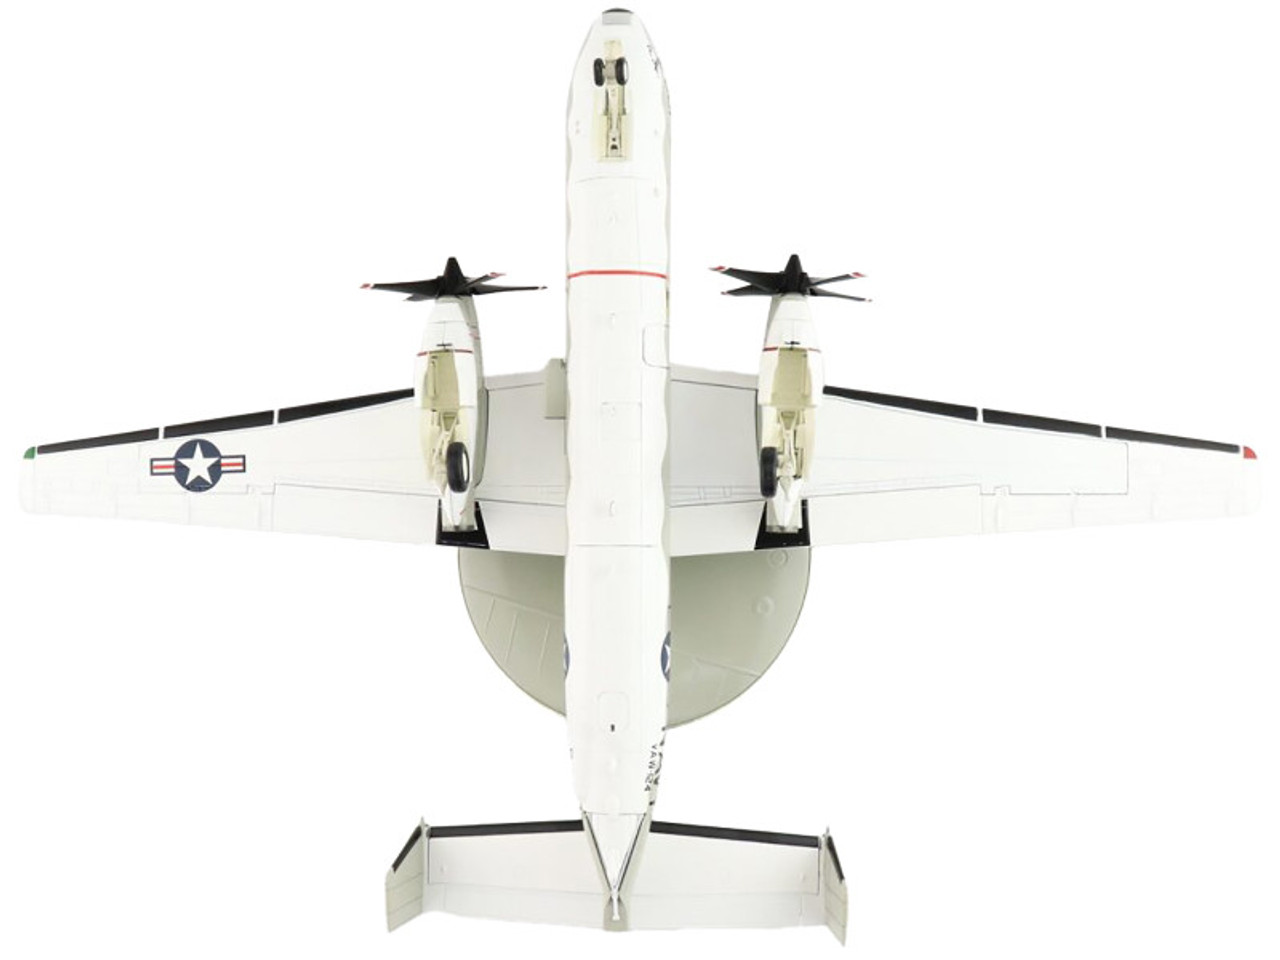 Northrop Grumman E-2C Hawkeye Aircraft "Miss B.Havin' VAW-124 Bear Aces Operation Desrt Storm" (1991) United States Navy "Air Power Series" 1/72 Diecast Model by Hobby Master